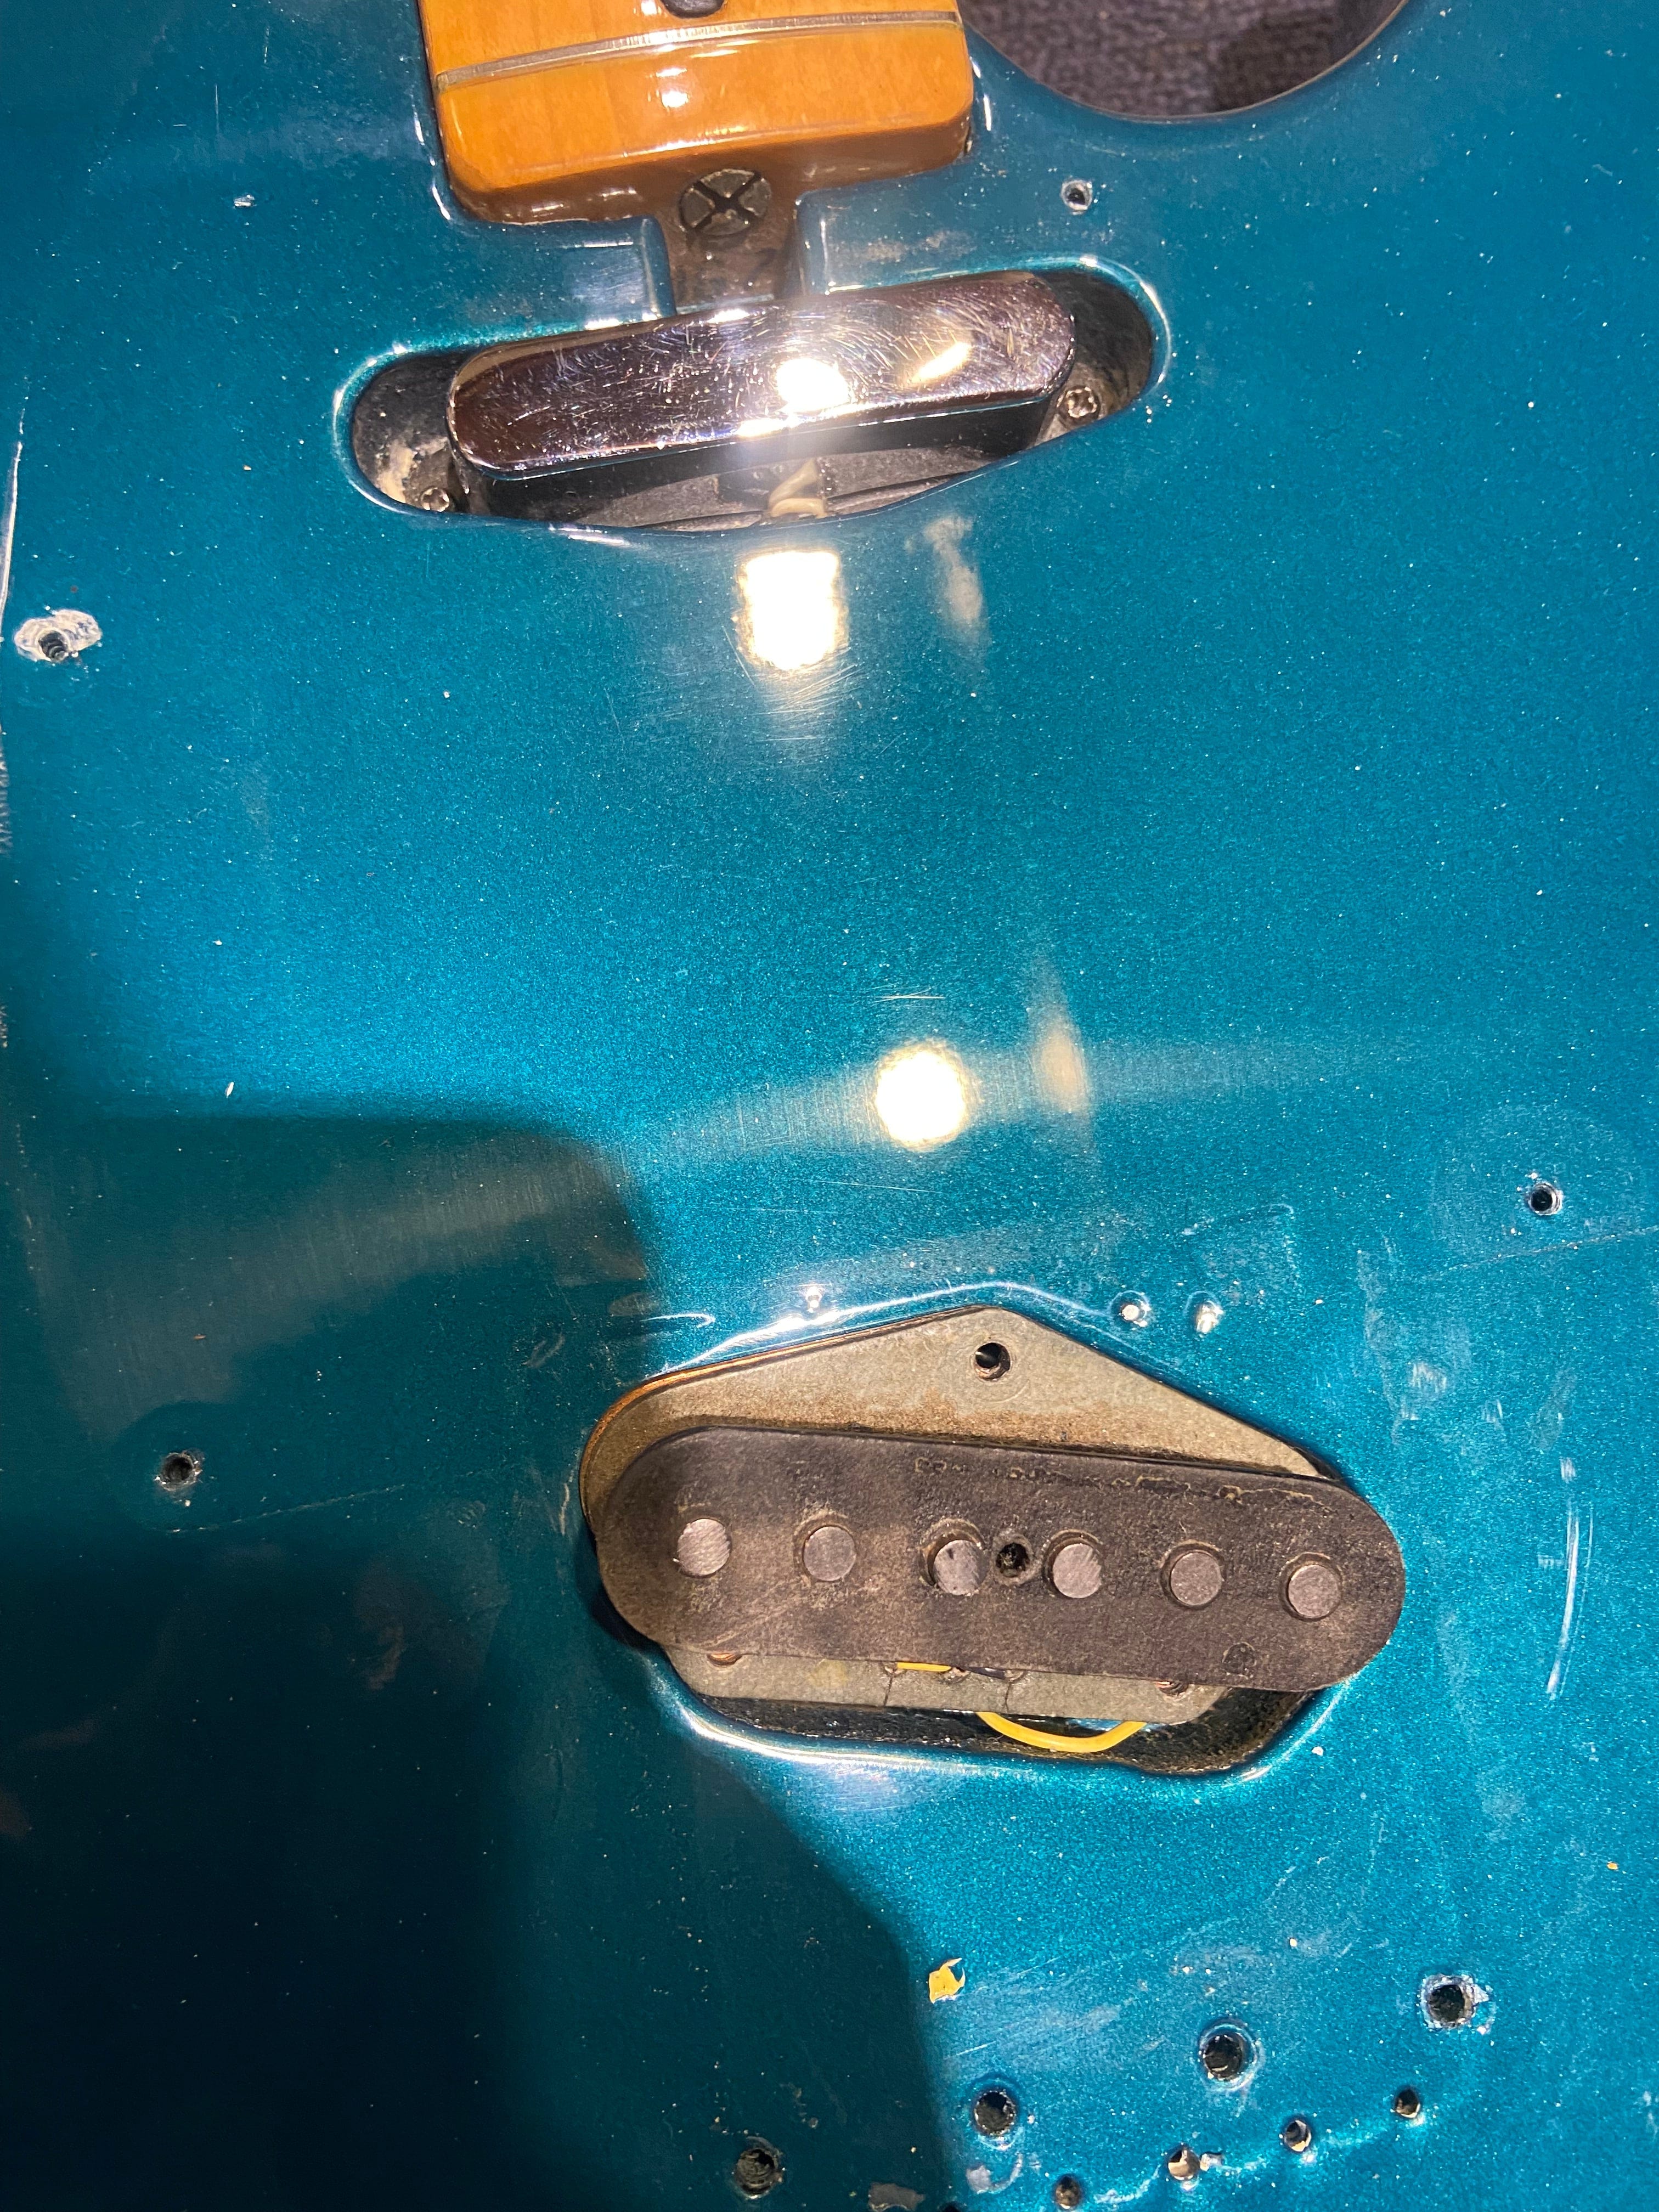 Fender Telecaster Ocean Metallic Blue Refin 1972 Electric Guitars / Solid Body